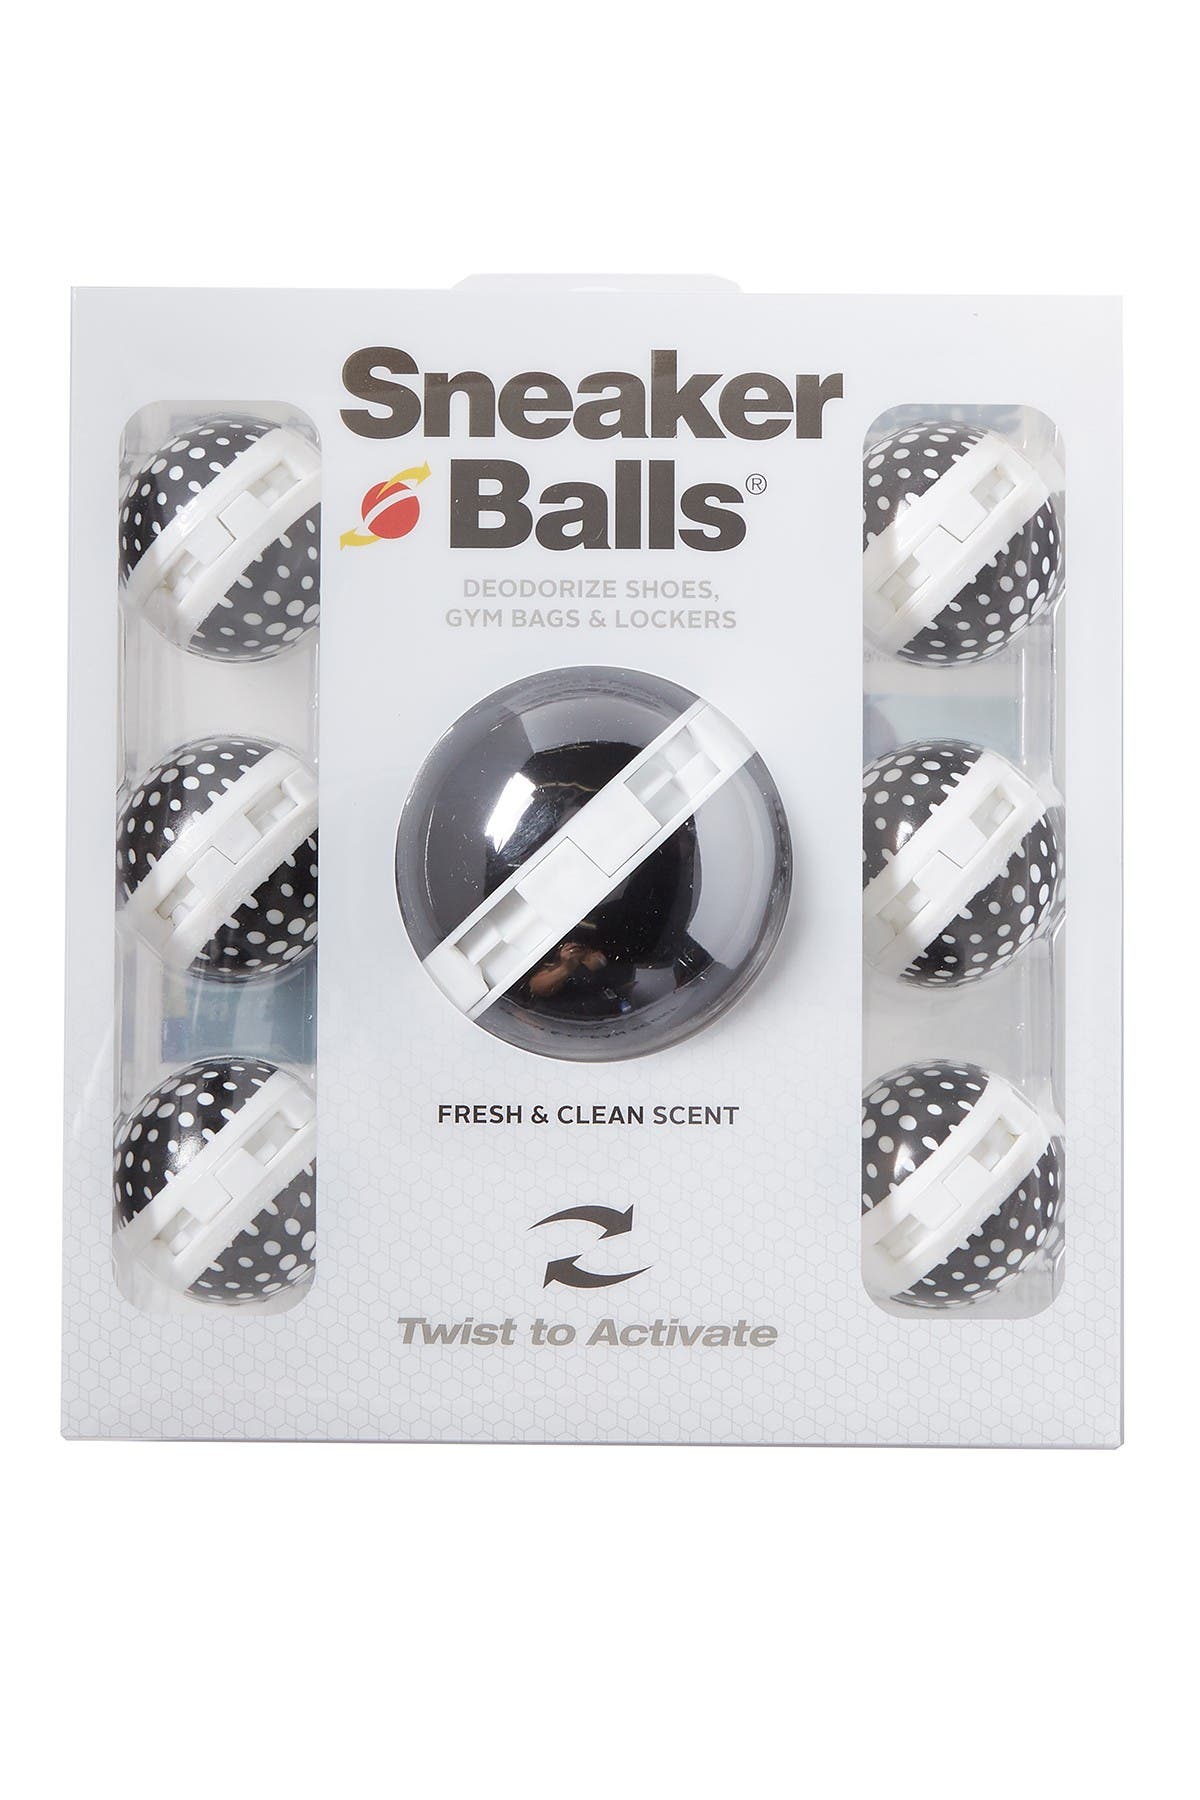 sof sole sneaker balls